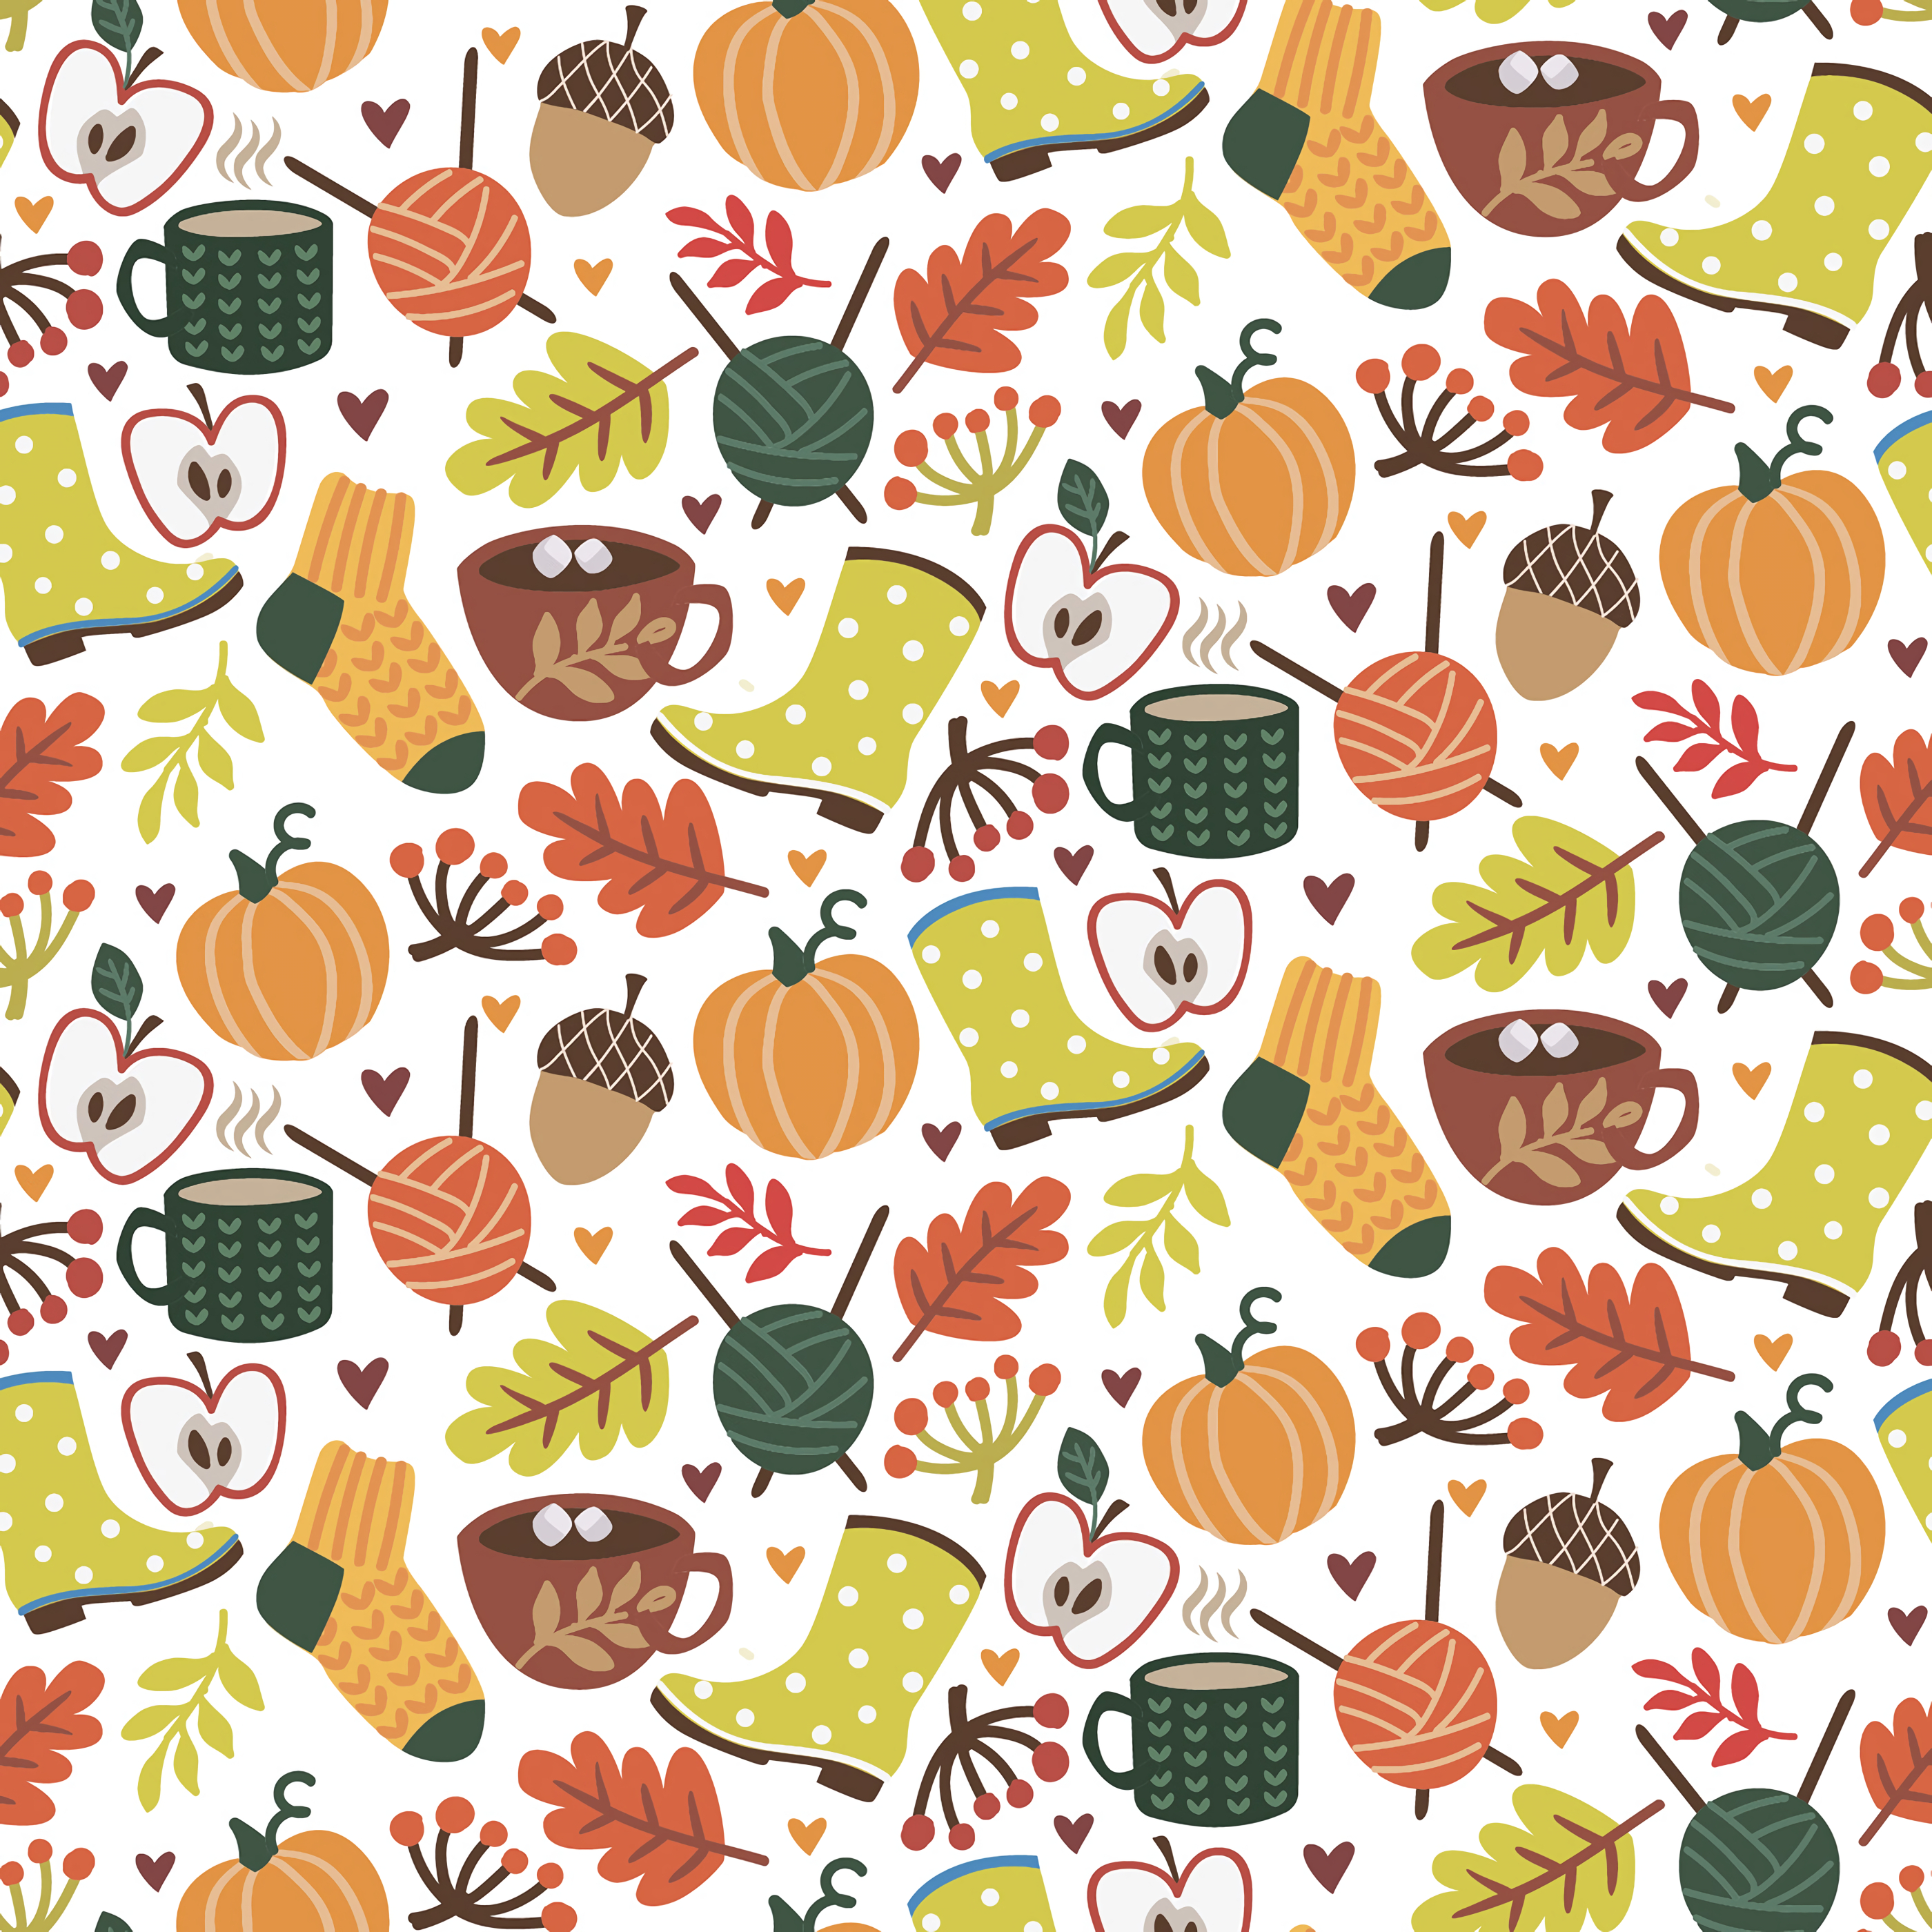 leaves, pattern, autumn, texture, textures, coziness, comfort, cocoa, socks Desktop home screen Wallpaper